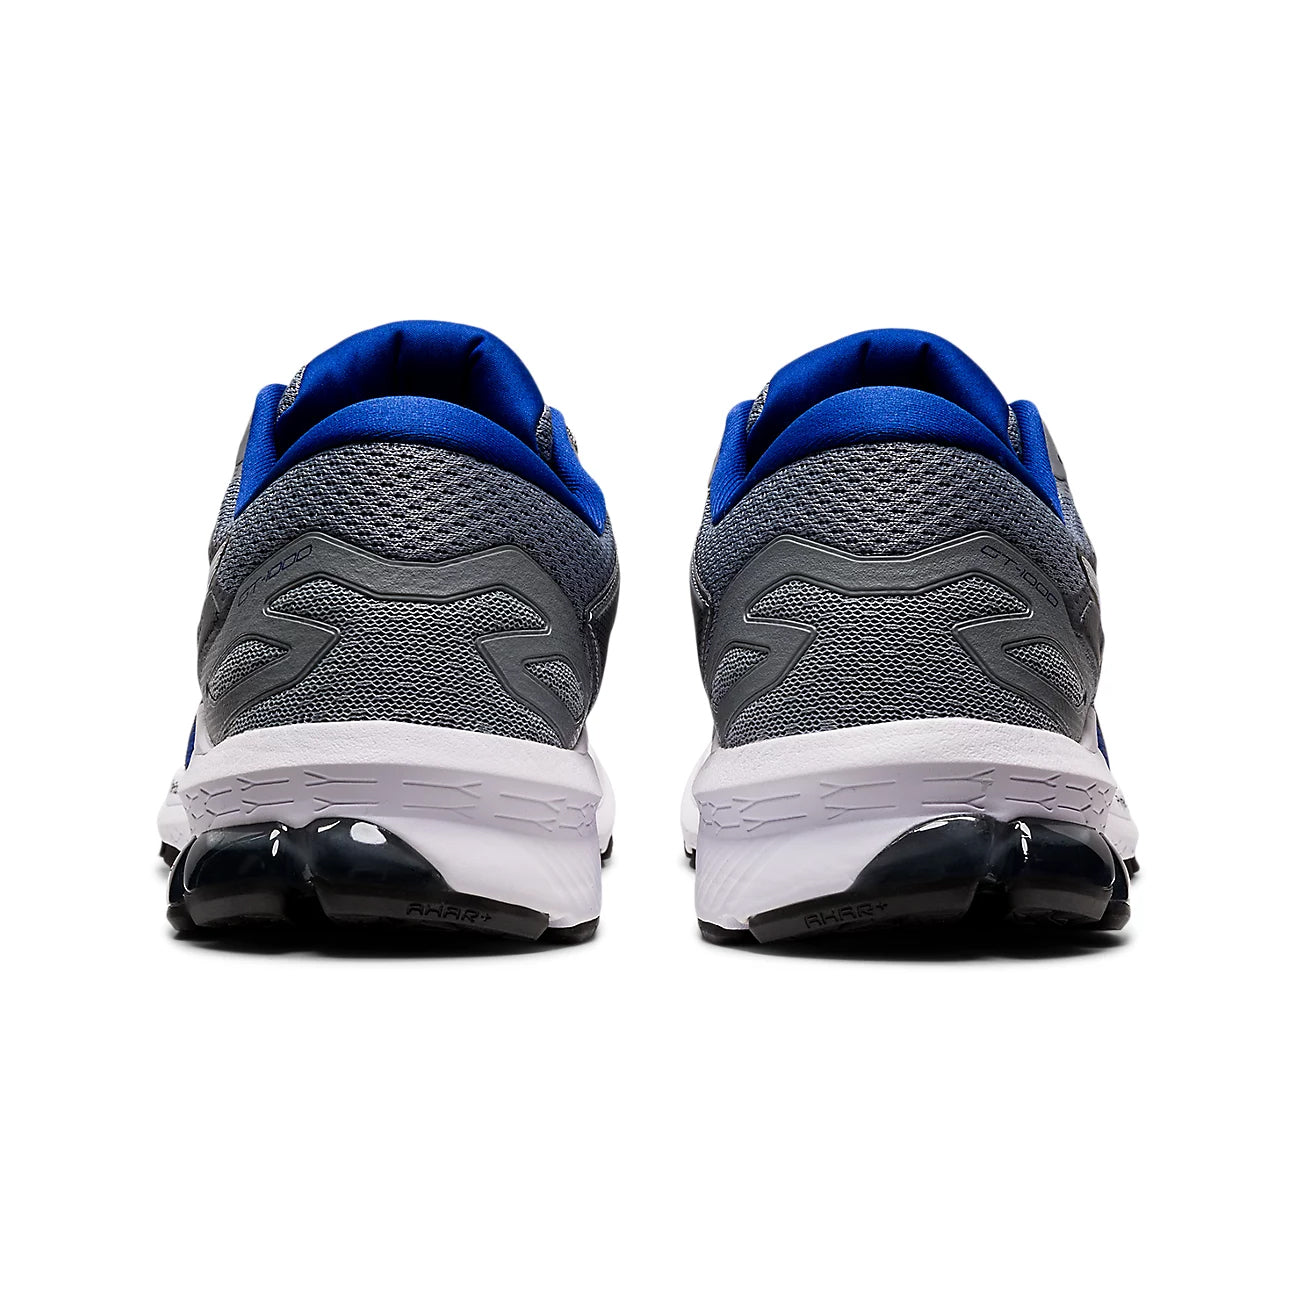 Asics GT-1000 10 Men's Running Shoes - Best Price online Prokicksports.com